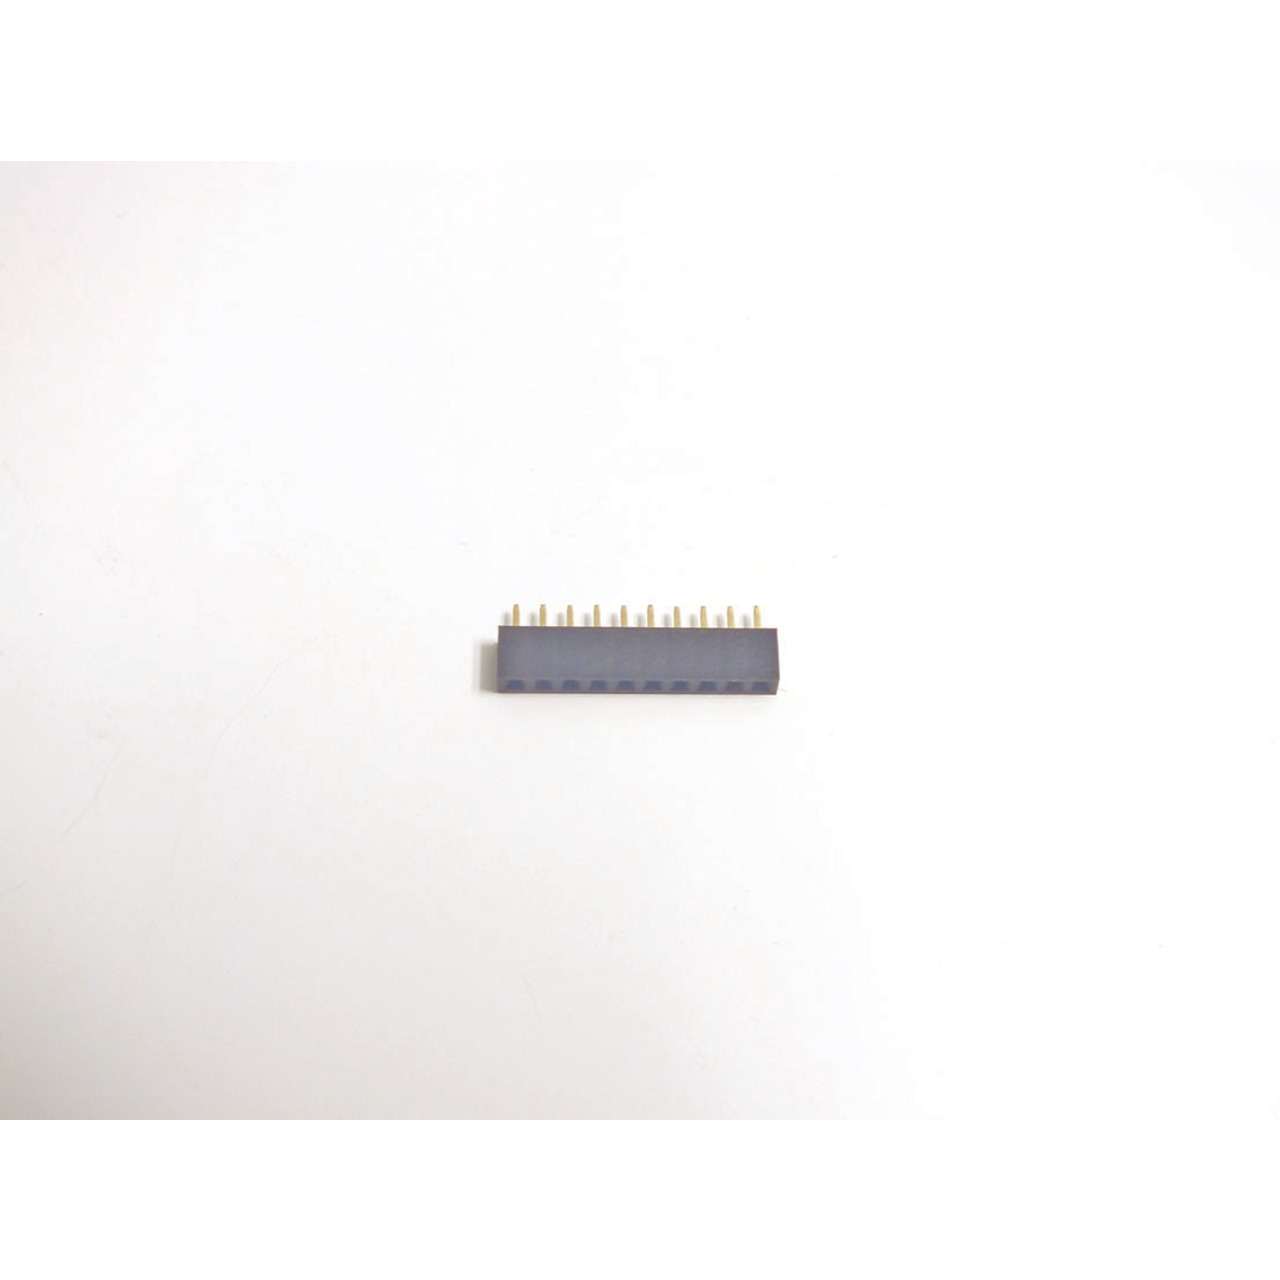 SMD-Buchsenleiste- 1x 10-polig- Körperhöhe 4-3 mm- gerade